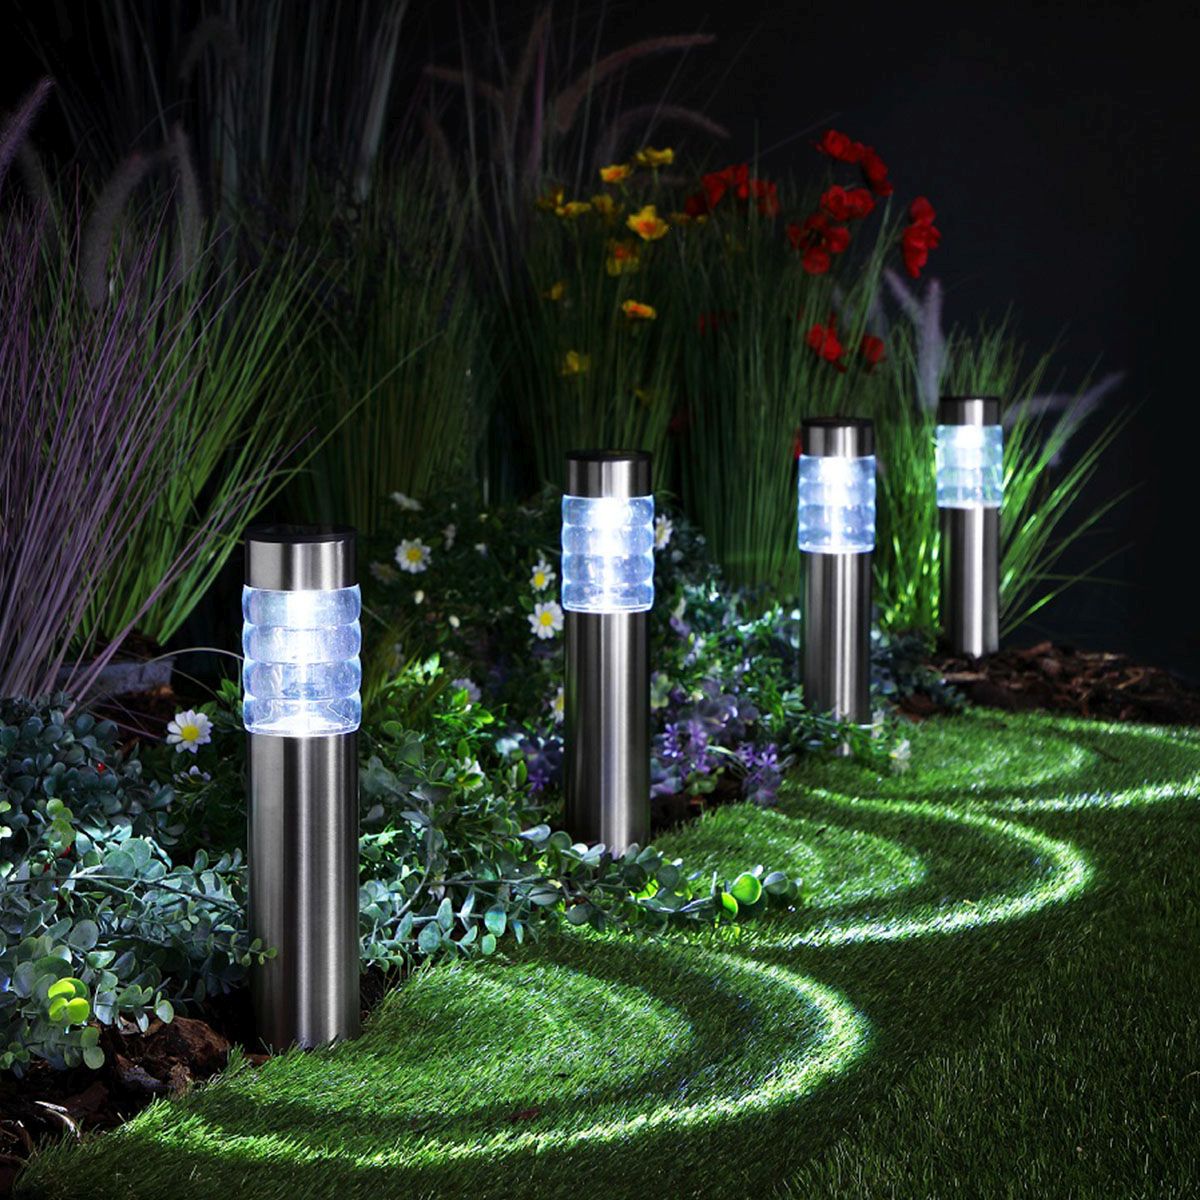 Noma Midi Prism Stainless Steel Bollard Garden Lights - Set of 4